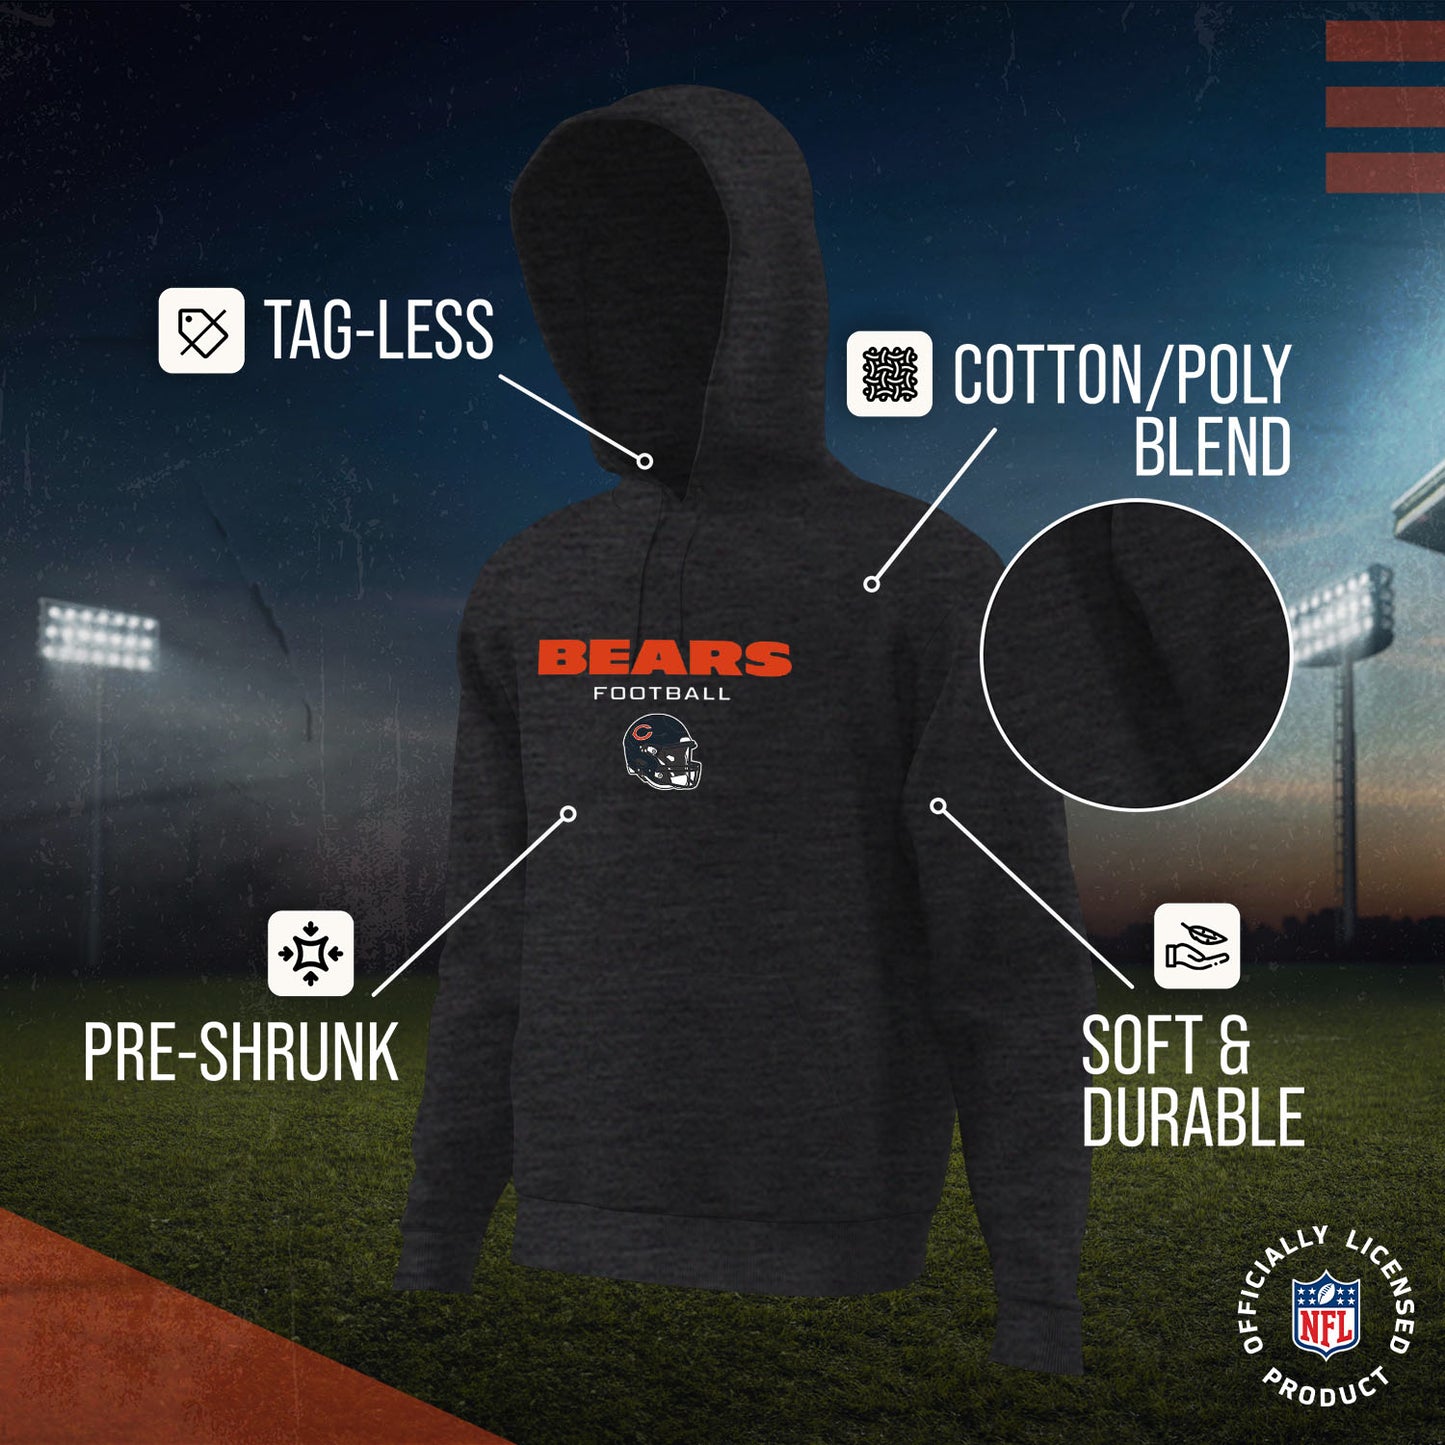 Chicago Bears Adult NFL Football Helmet Heather Hooded Sweatshirt  - Charcoal